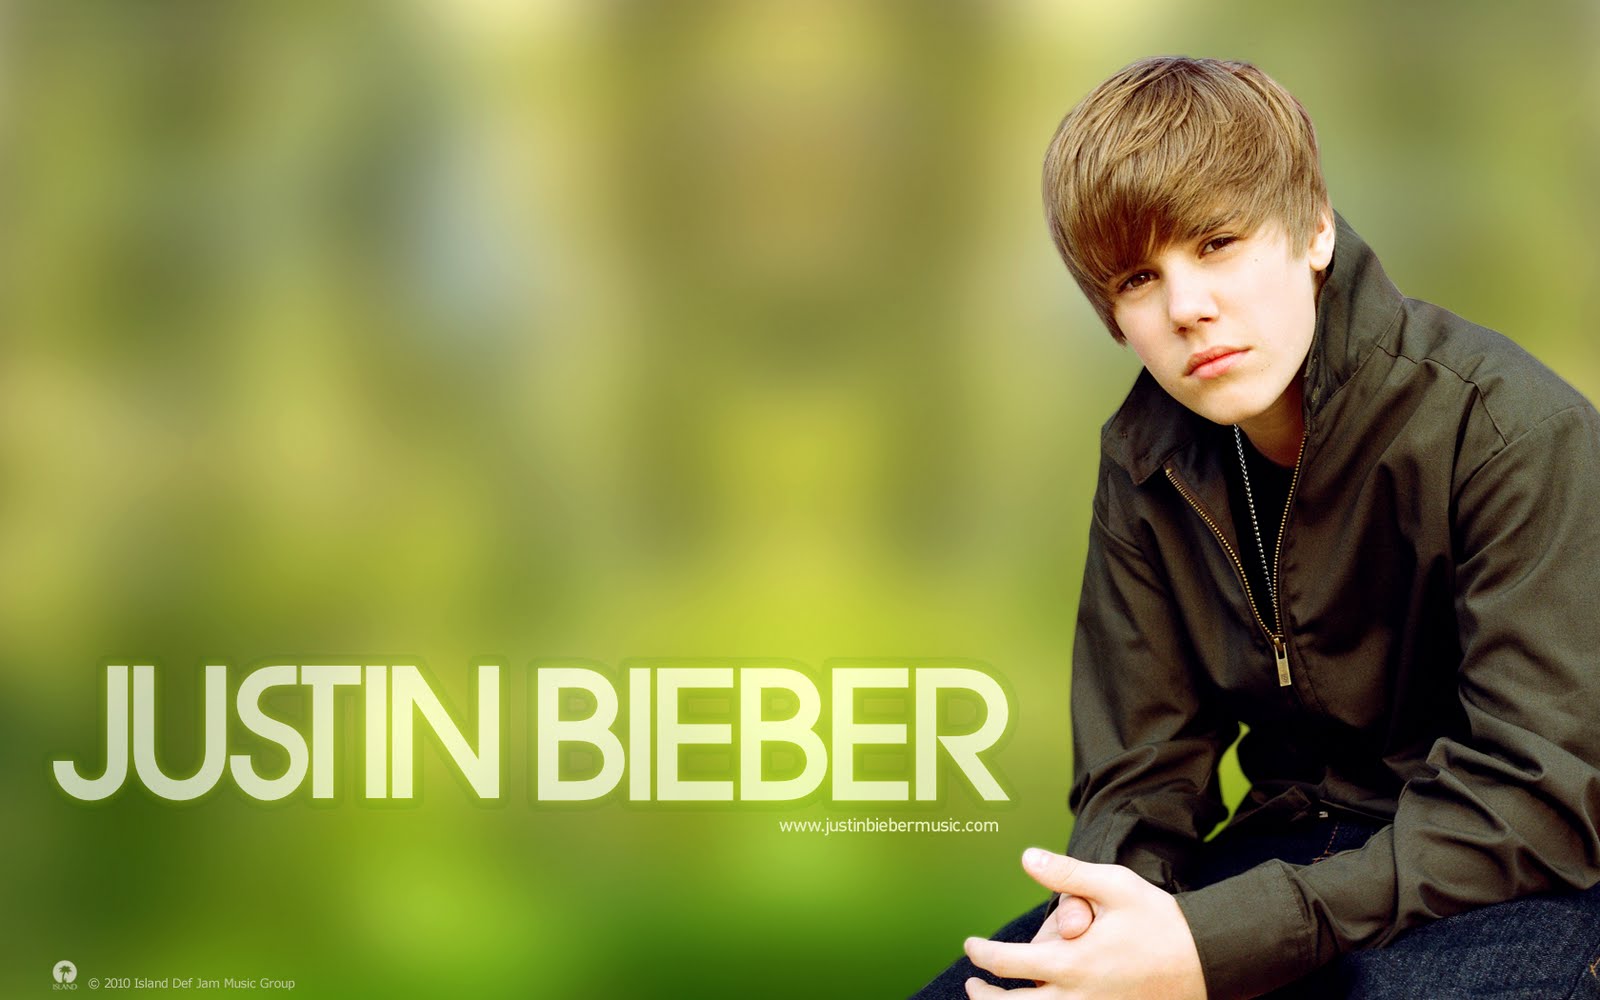 [Picture] Cool Justin Bieber Pics Wallpaper